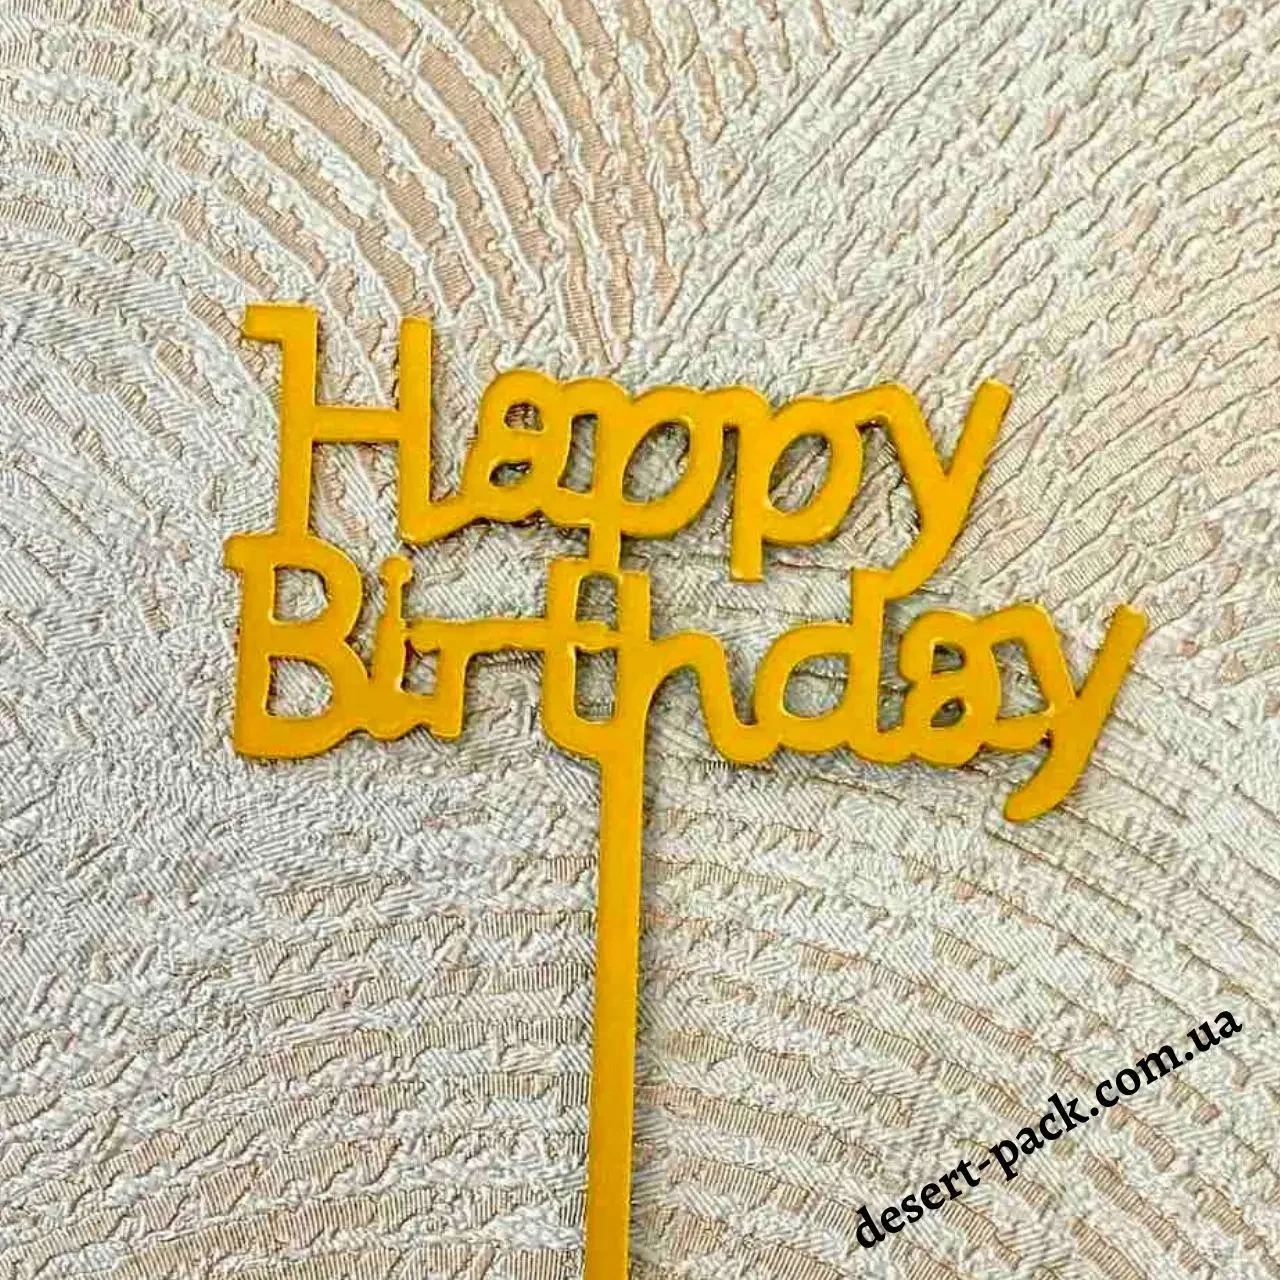 Топпер на торт "Happy birthday " (ЛОТ 11)